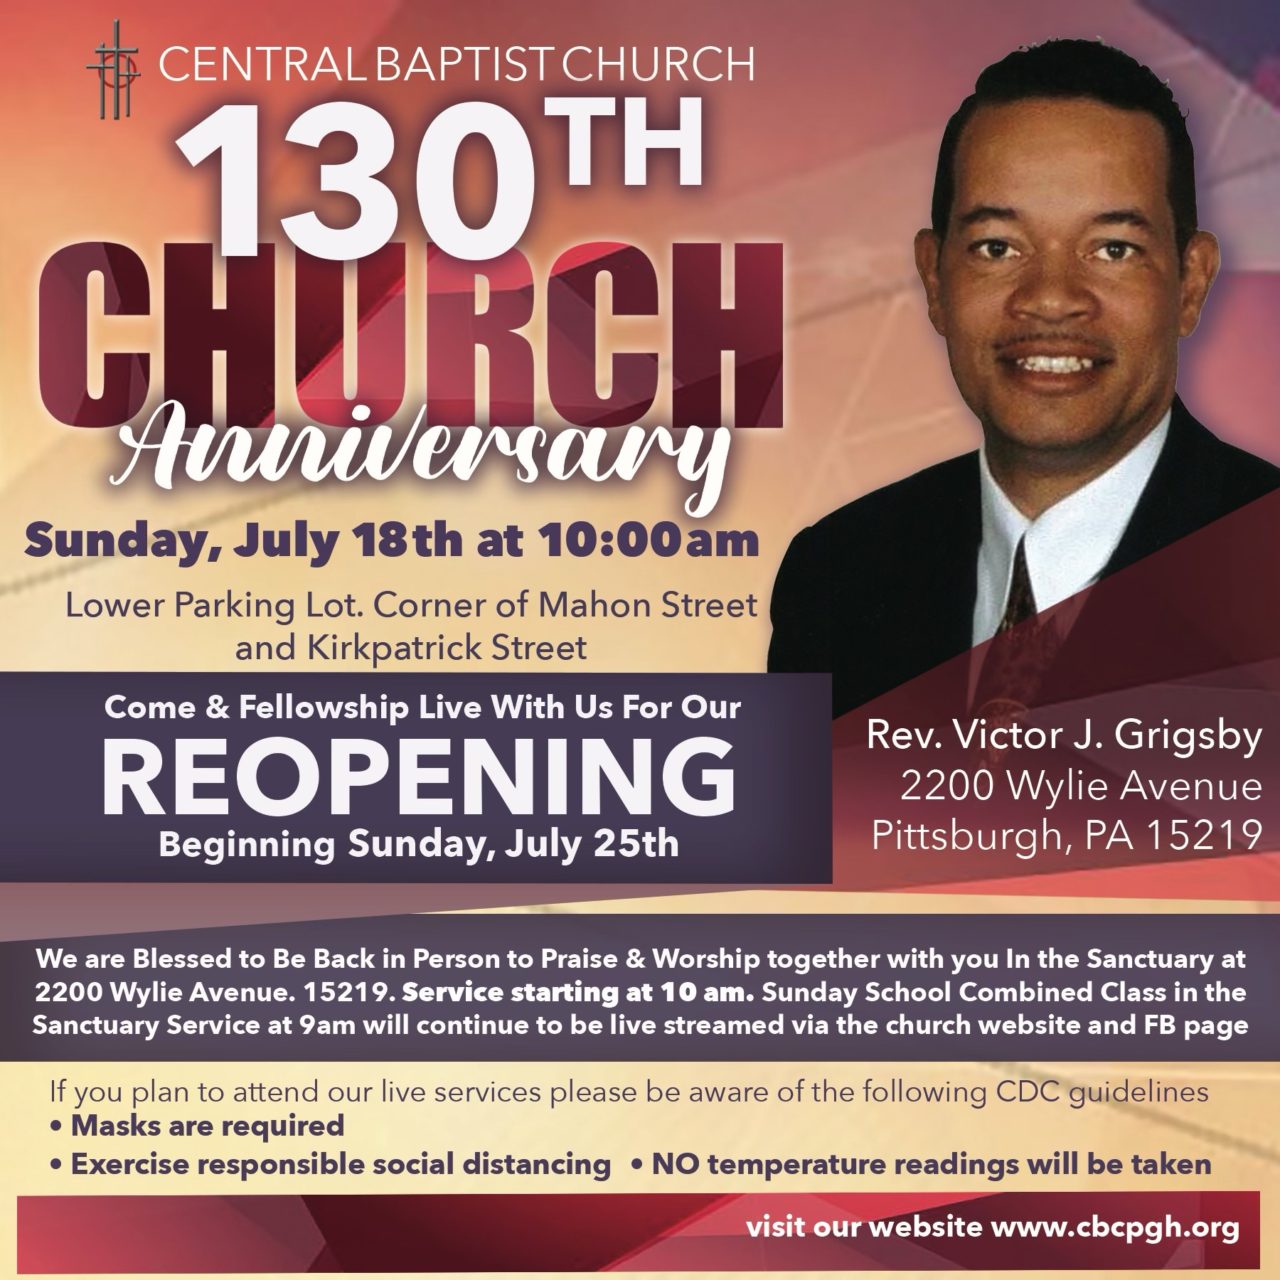 Central Baptist Church 130th Church Anniversary | Central Baptist ...